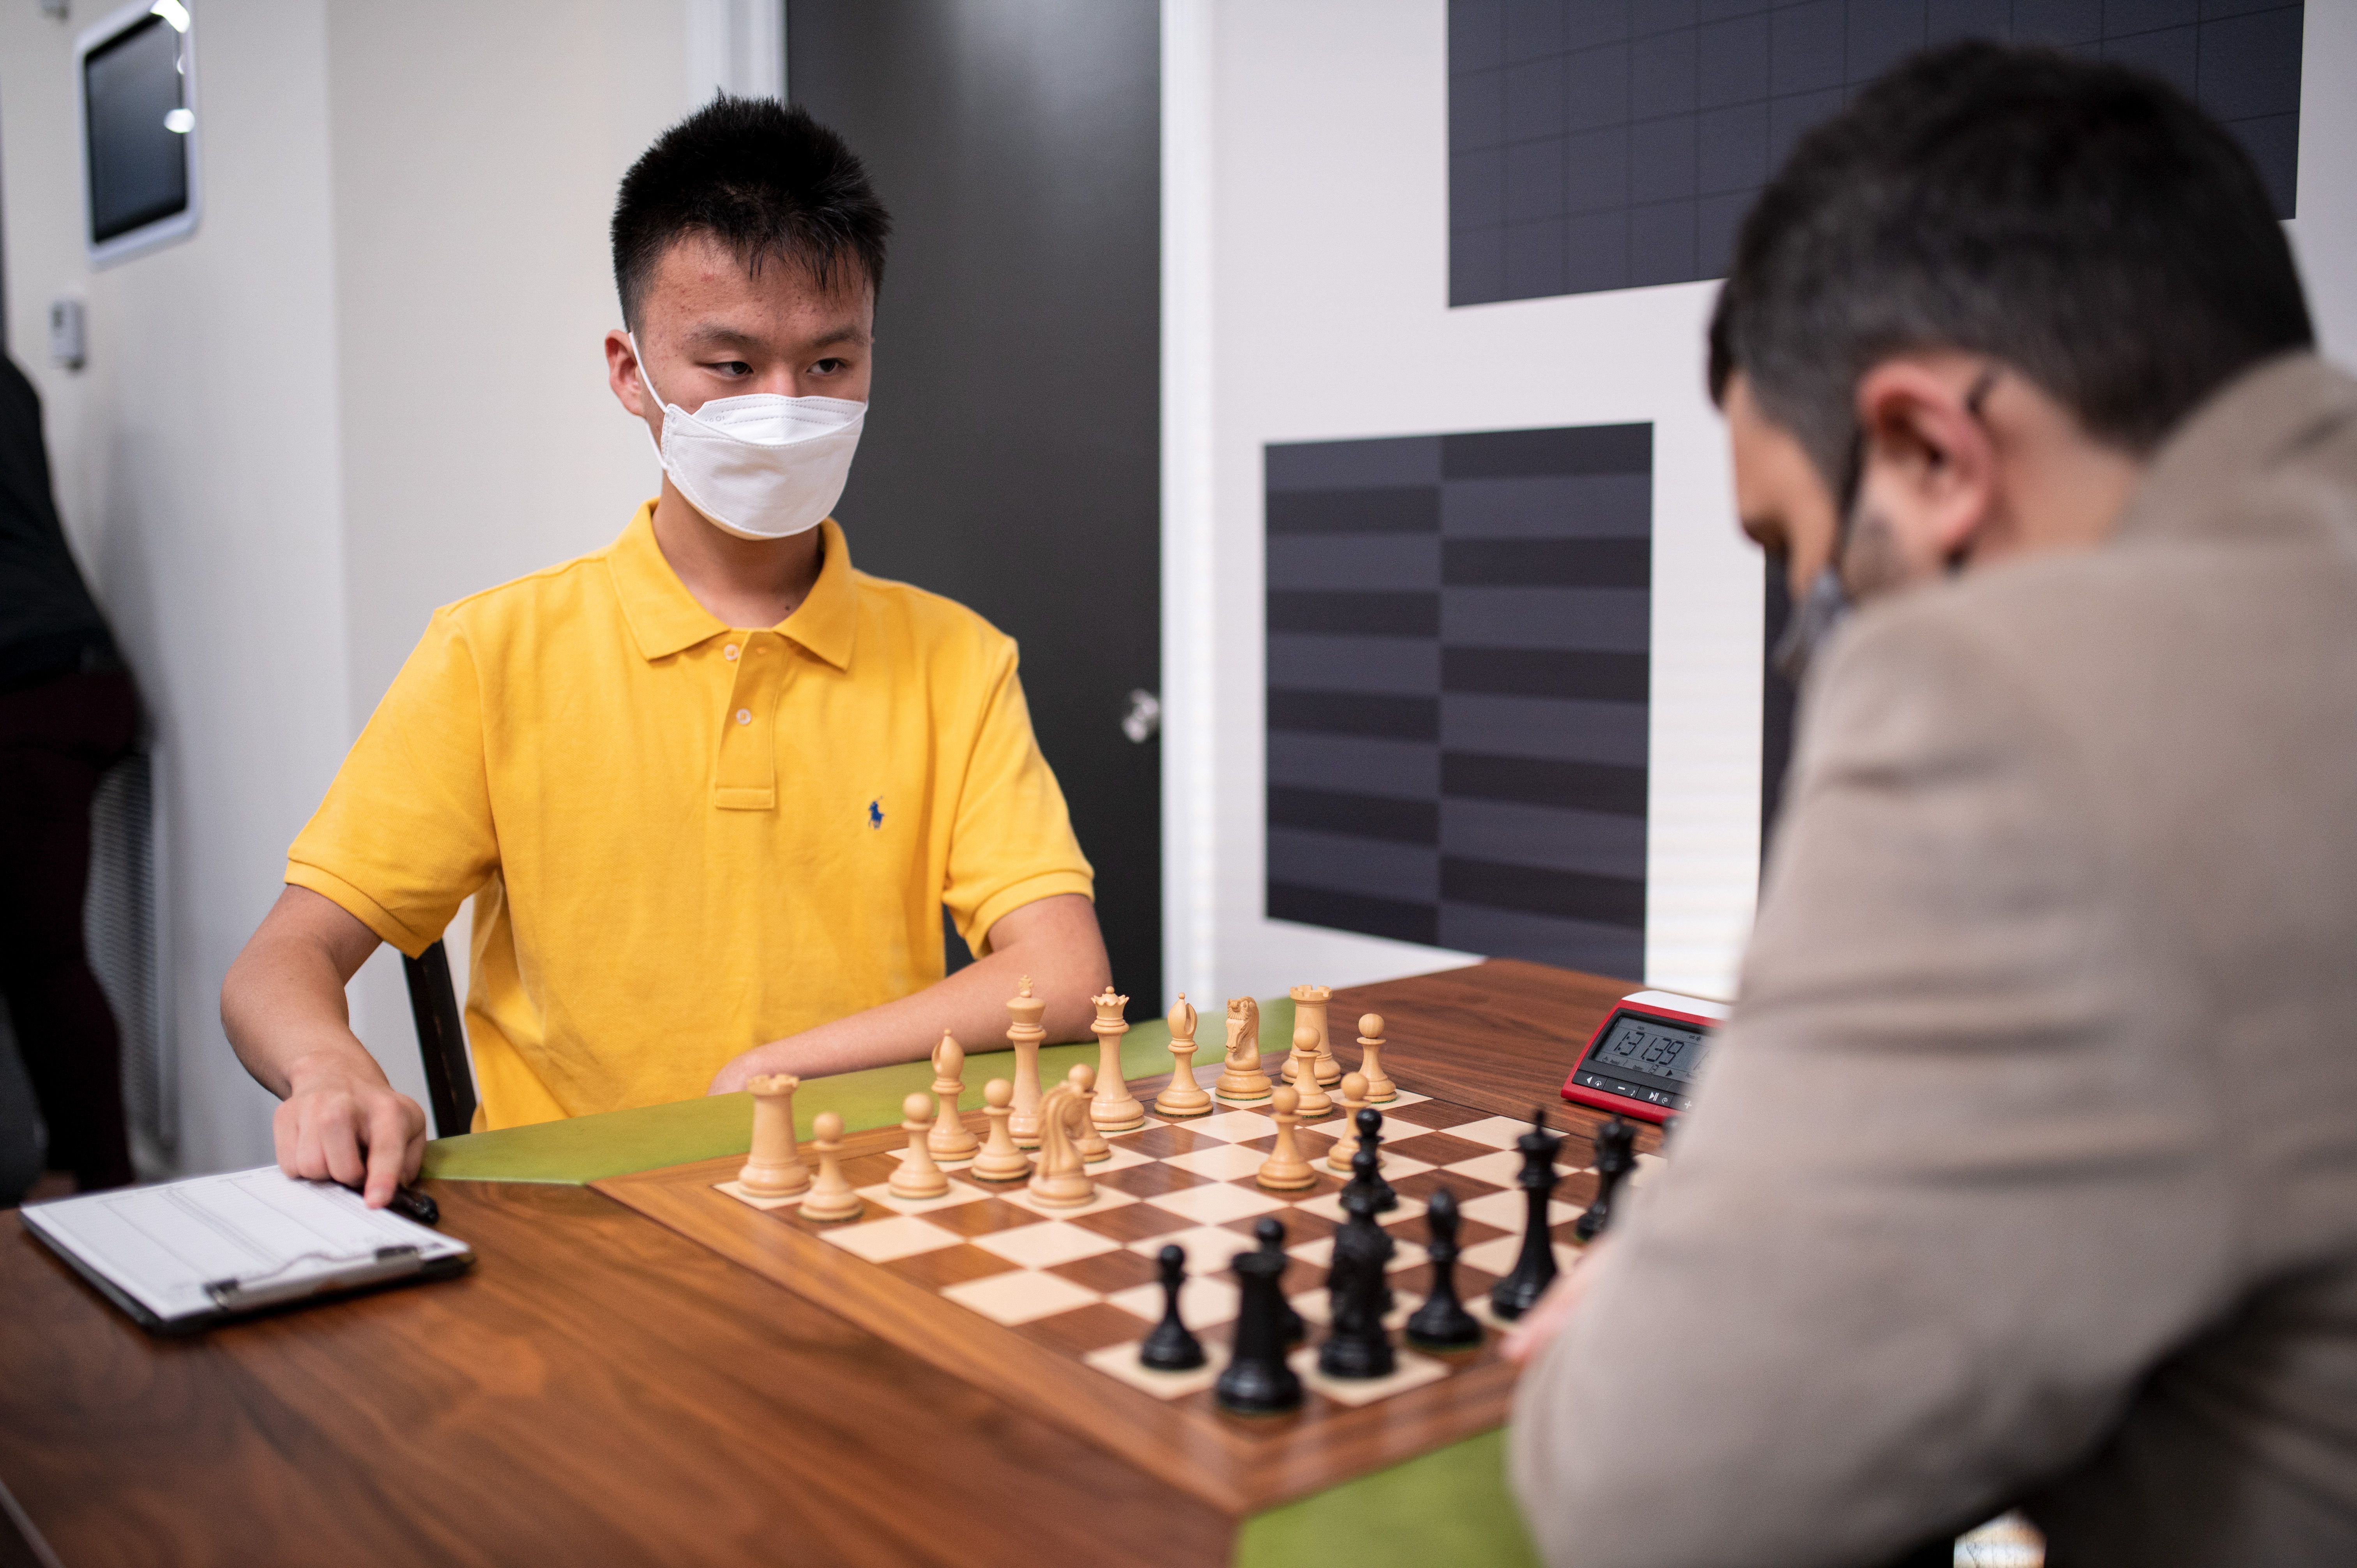 Minnetonka chess player shares lead at U.S. Chess Championship